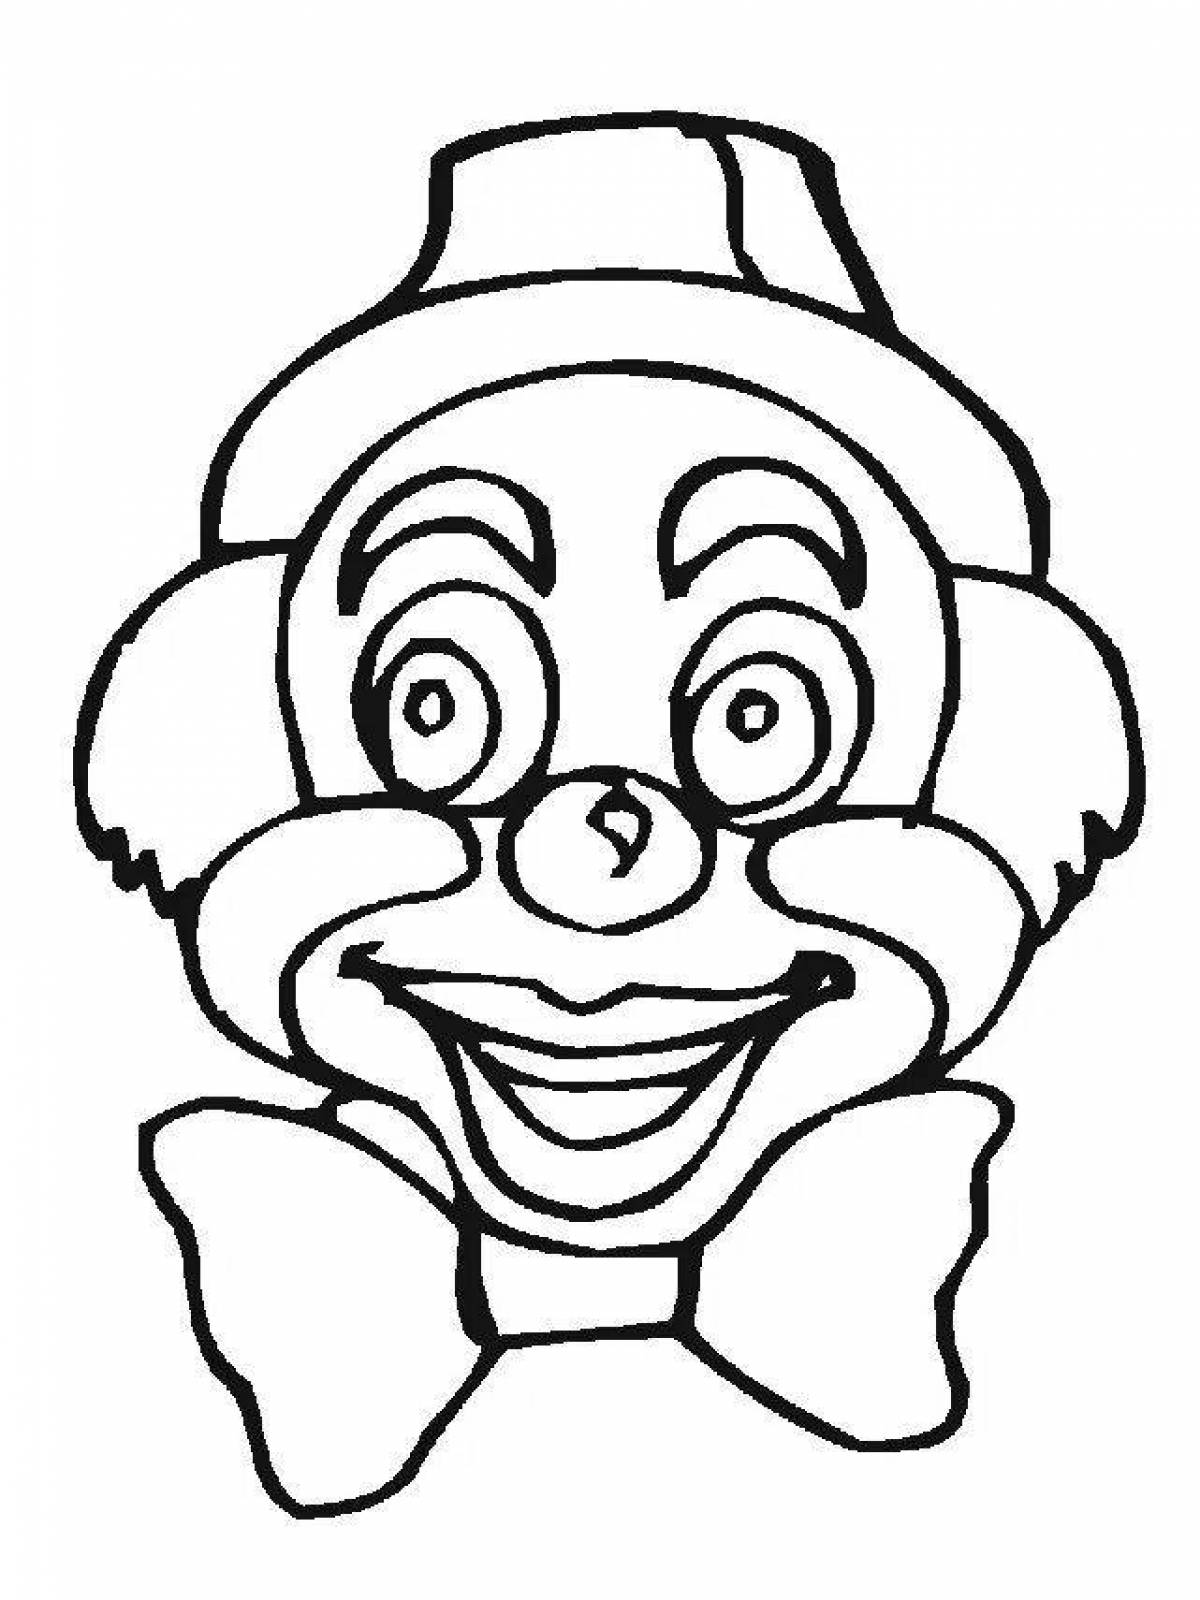 Мордочка клоуна. Клоун раскраска. Веселый клоун раскраска. Раскраска весёлый клоун для детей. Лицо клоуна раскраска.